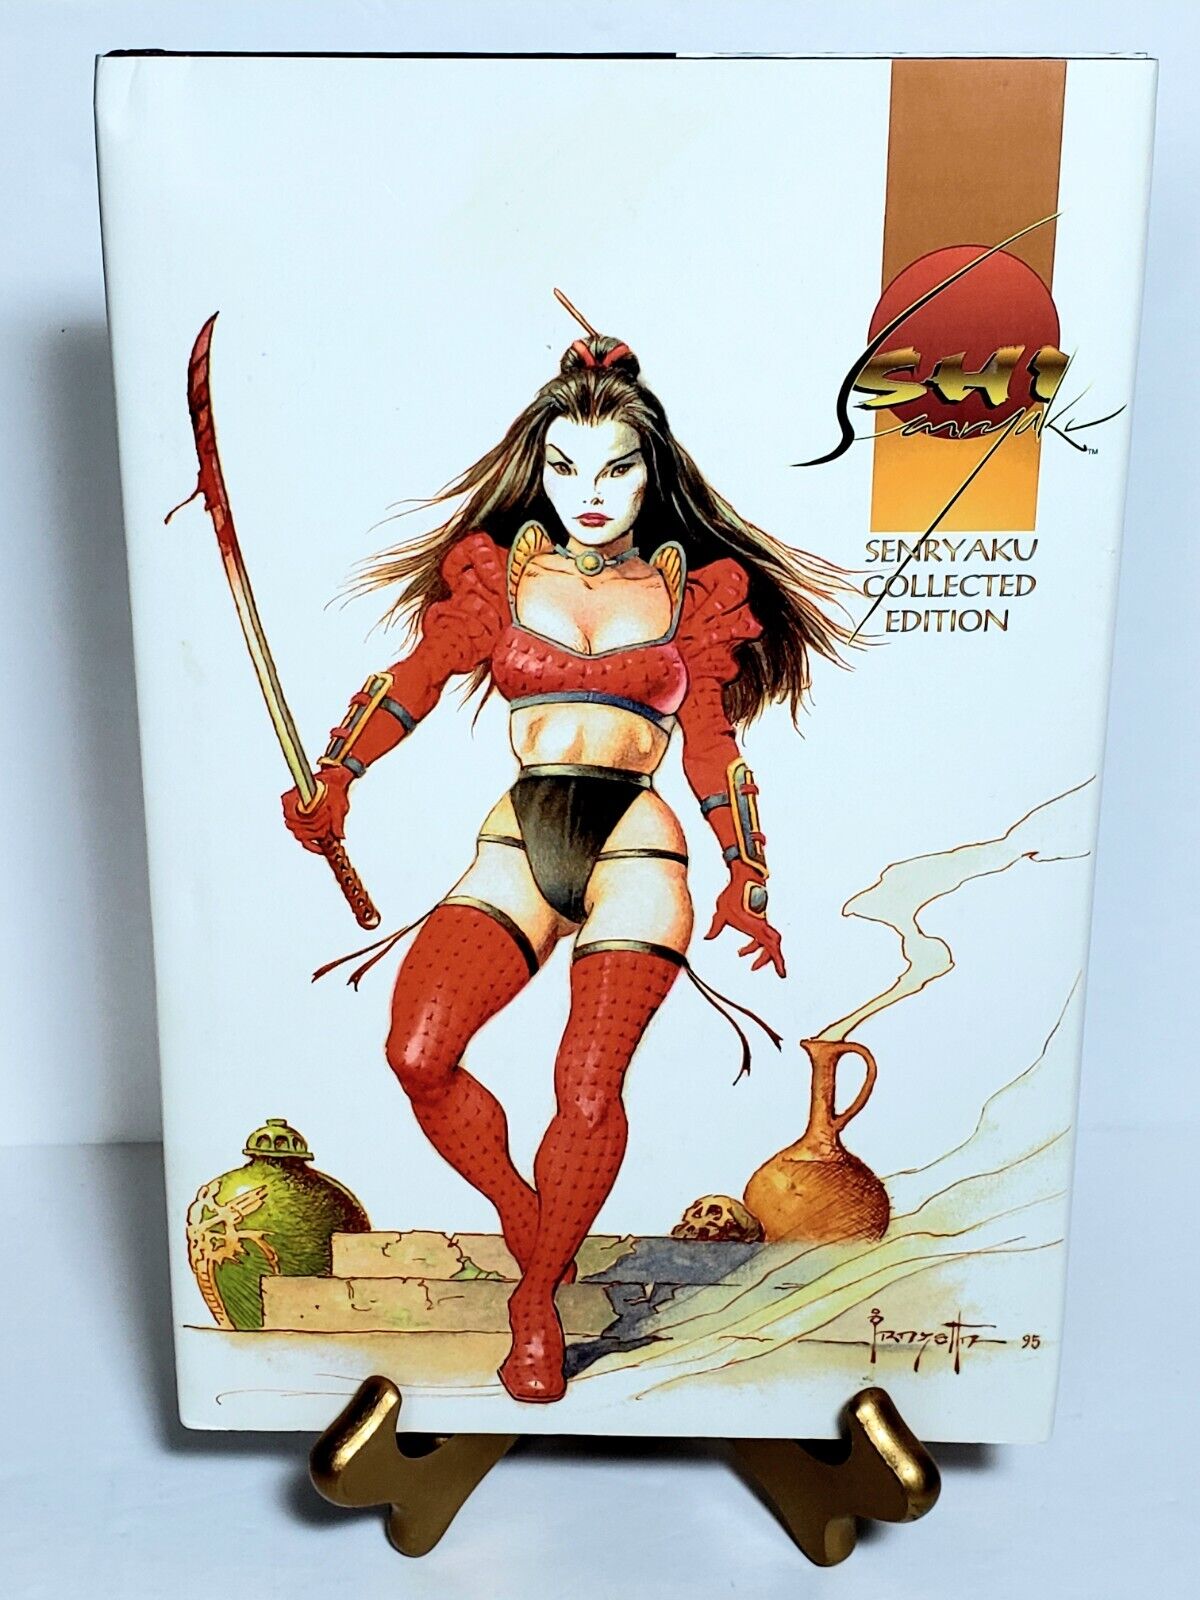 Crusade Comics Shi Senryaku Collected Edition #1 Comic Book 1996 Hard Cover